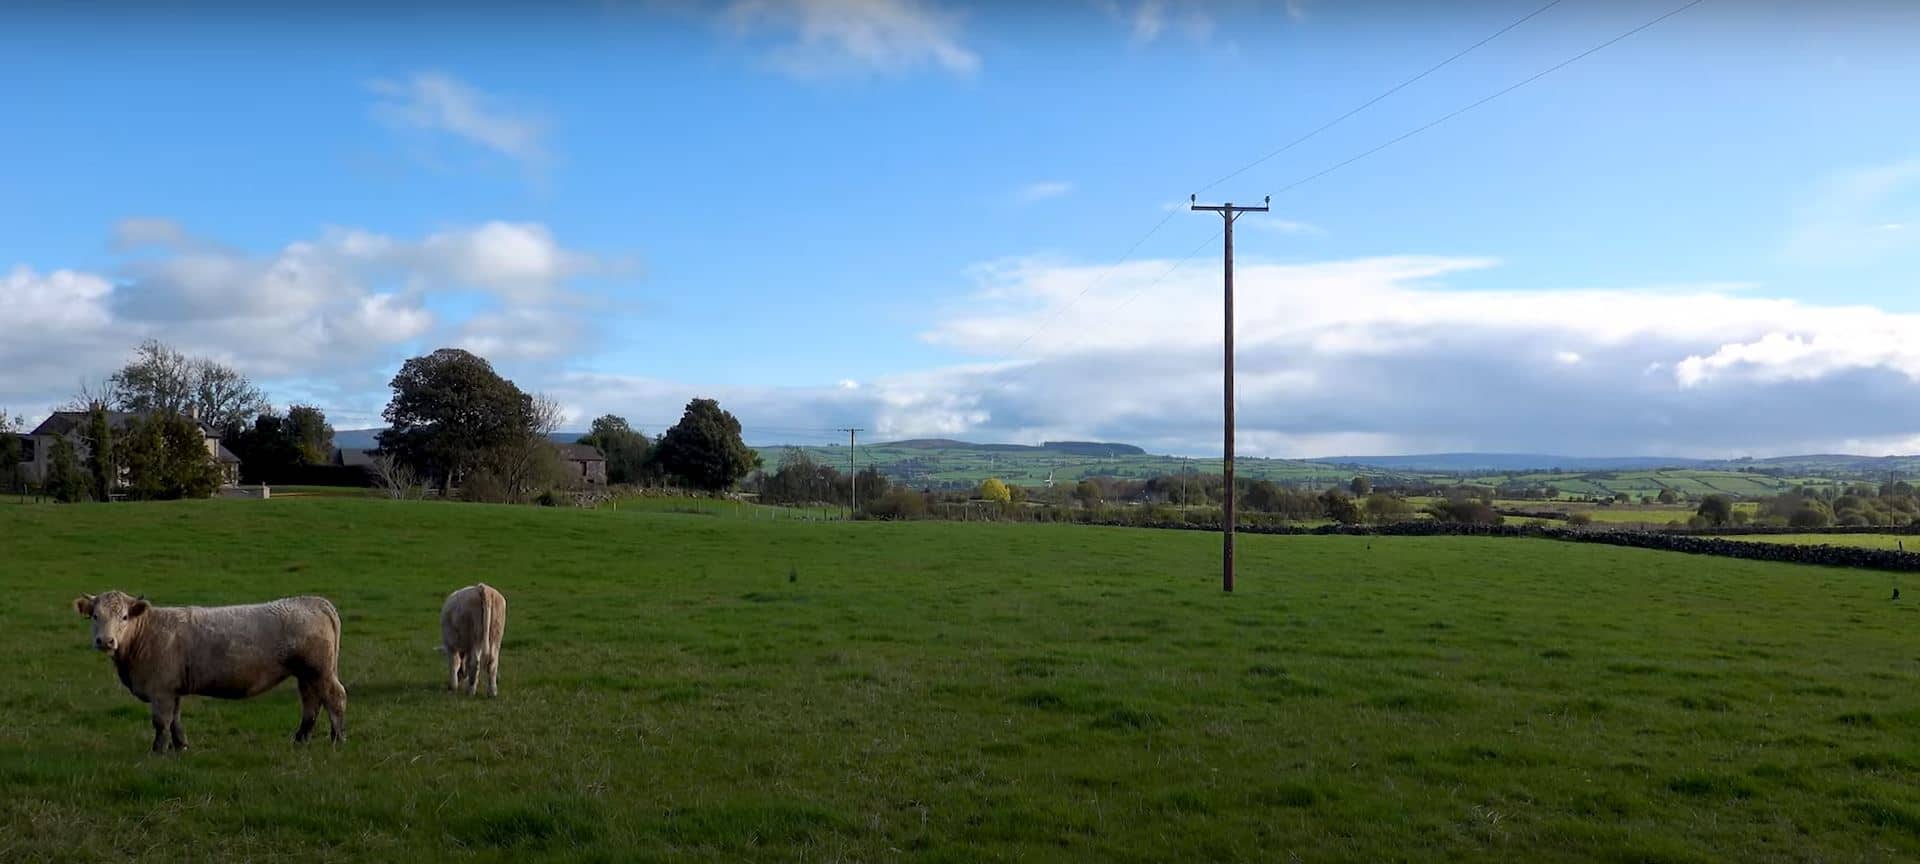 Castlederg Countryside, County Tyrone, Northern Ireland, Lamb